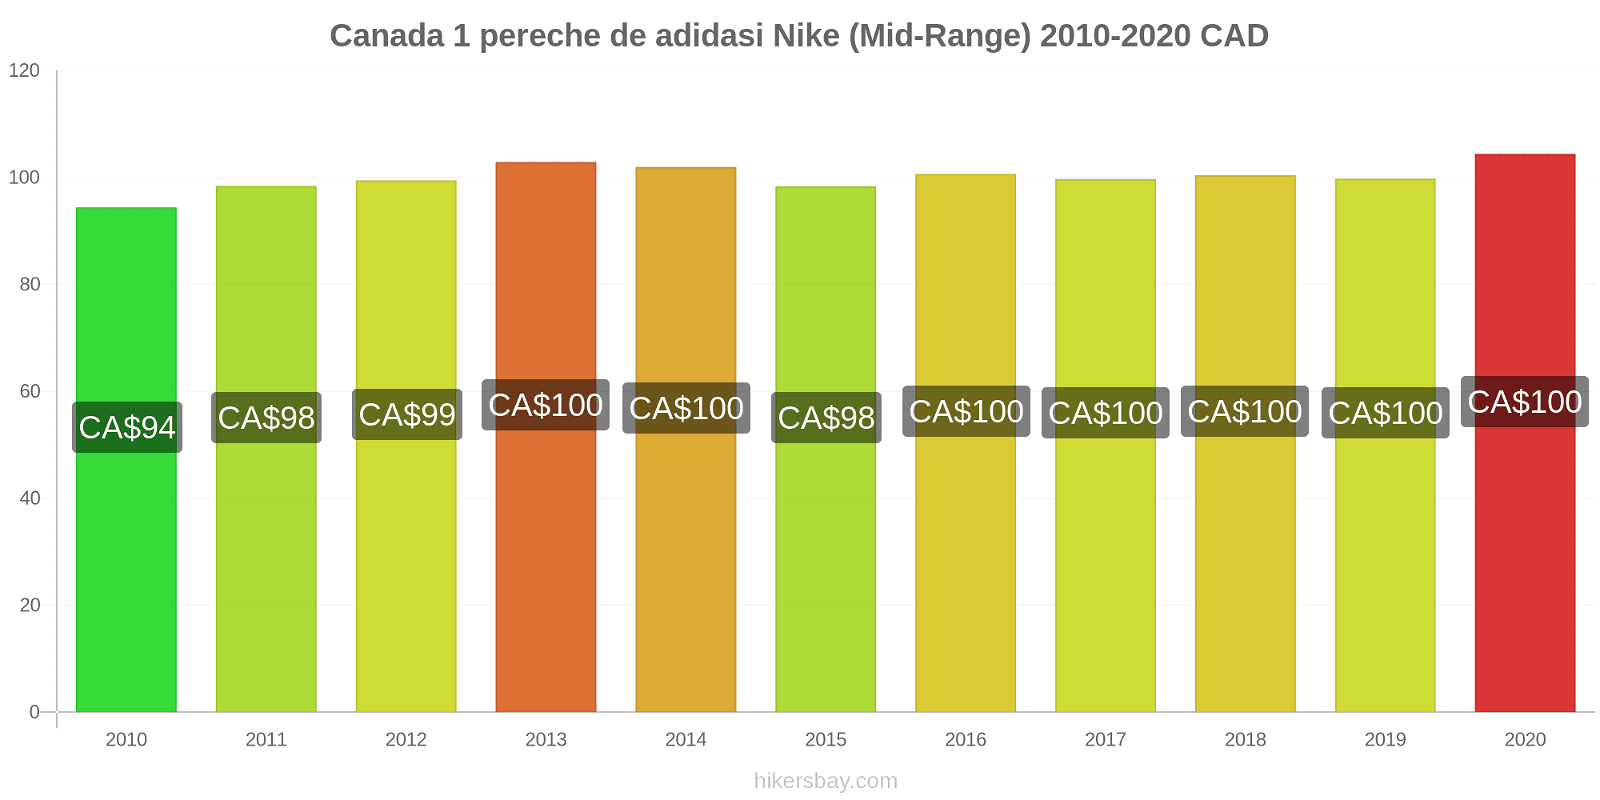 Canada modificări de preț 1 pereche de adidasi Nike (Mid-Range) hikersbay.com